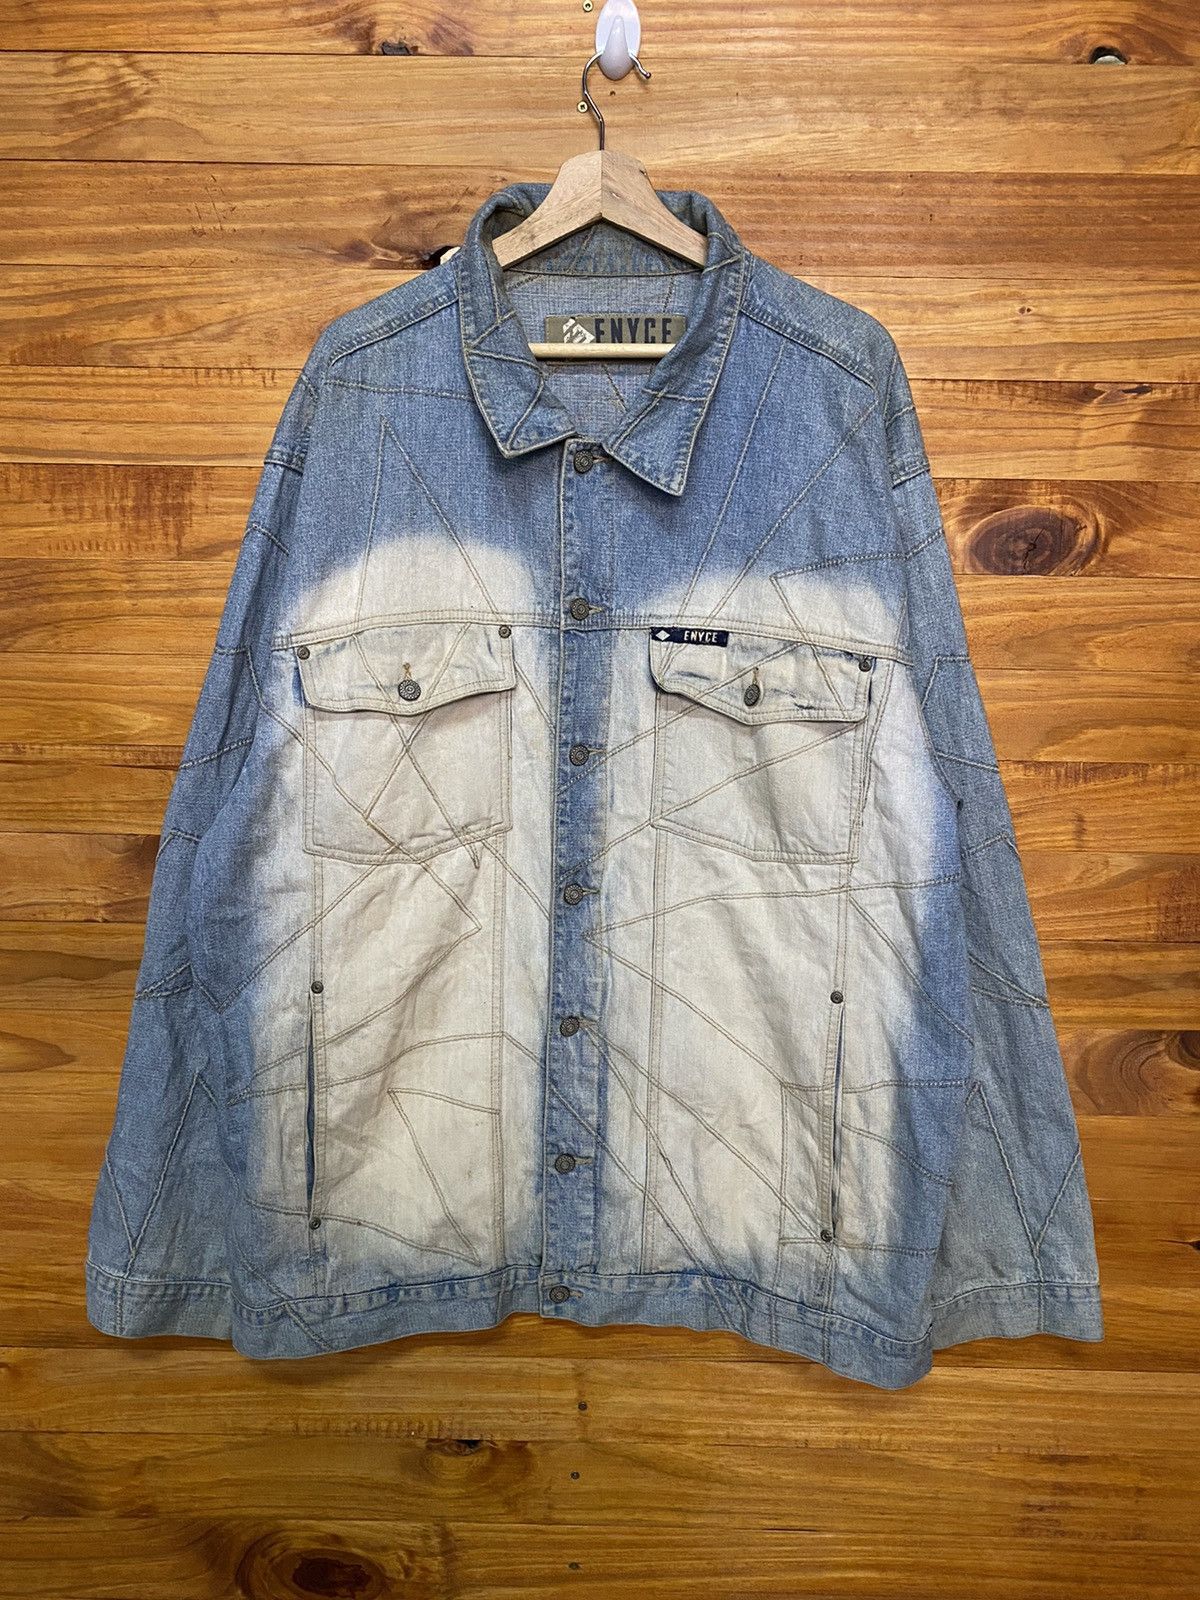 Japanese Brand Enyce Brand Denim Patchwork Shirt Jacket | Grailed